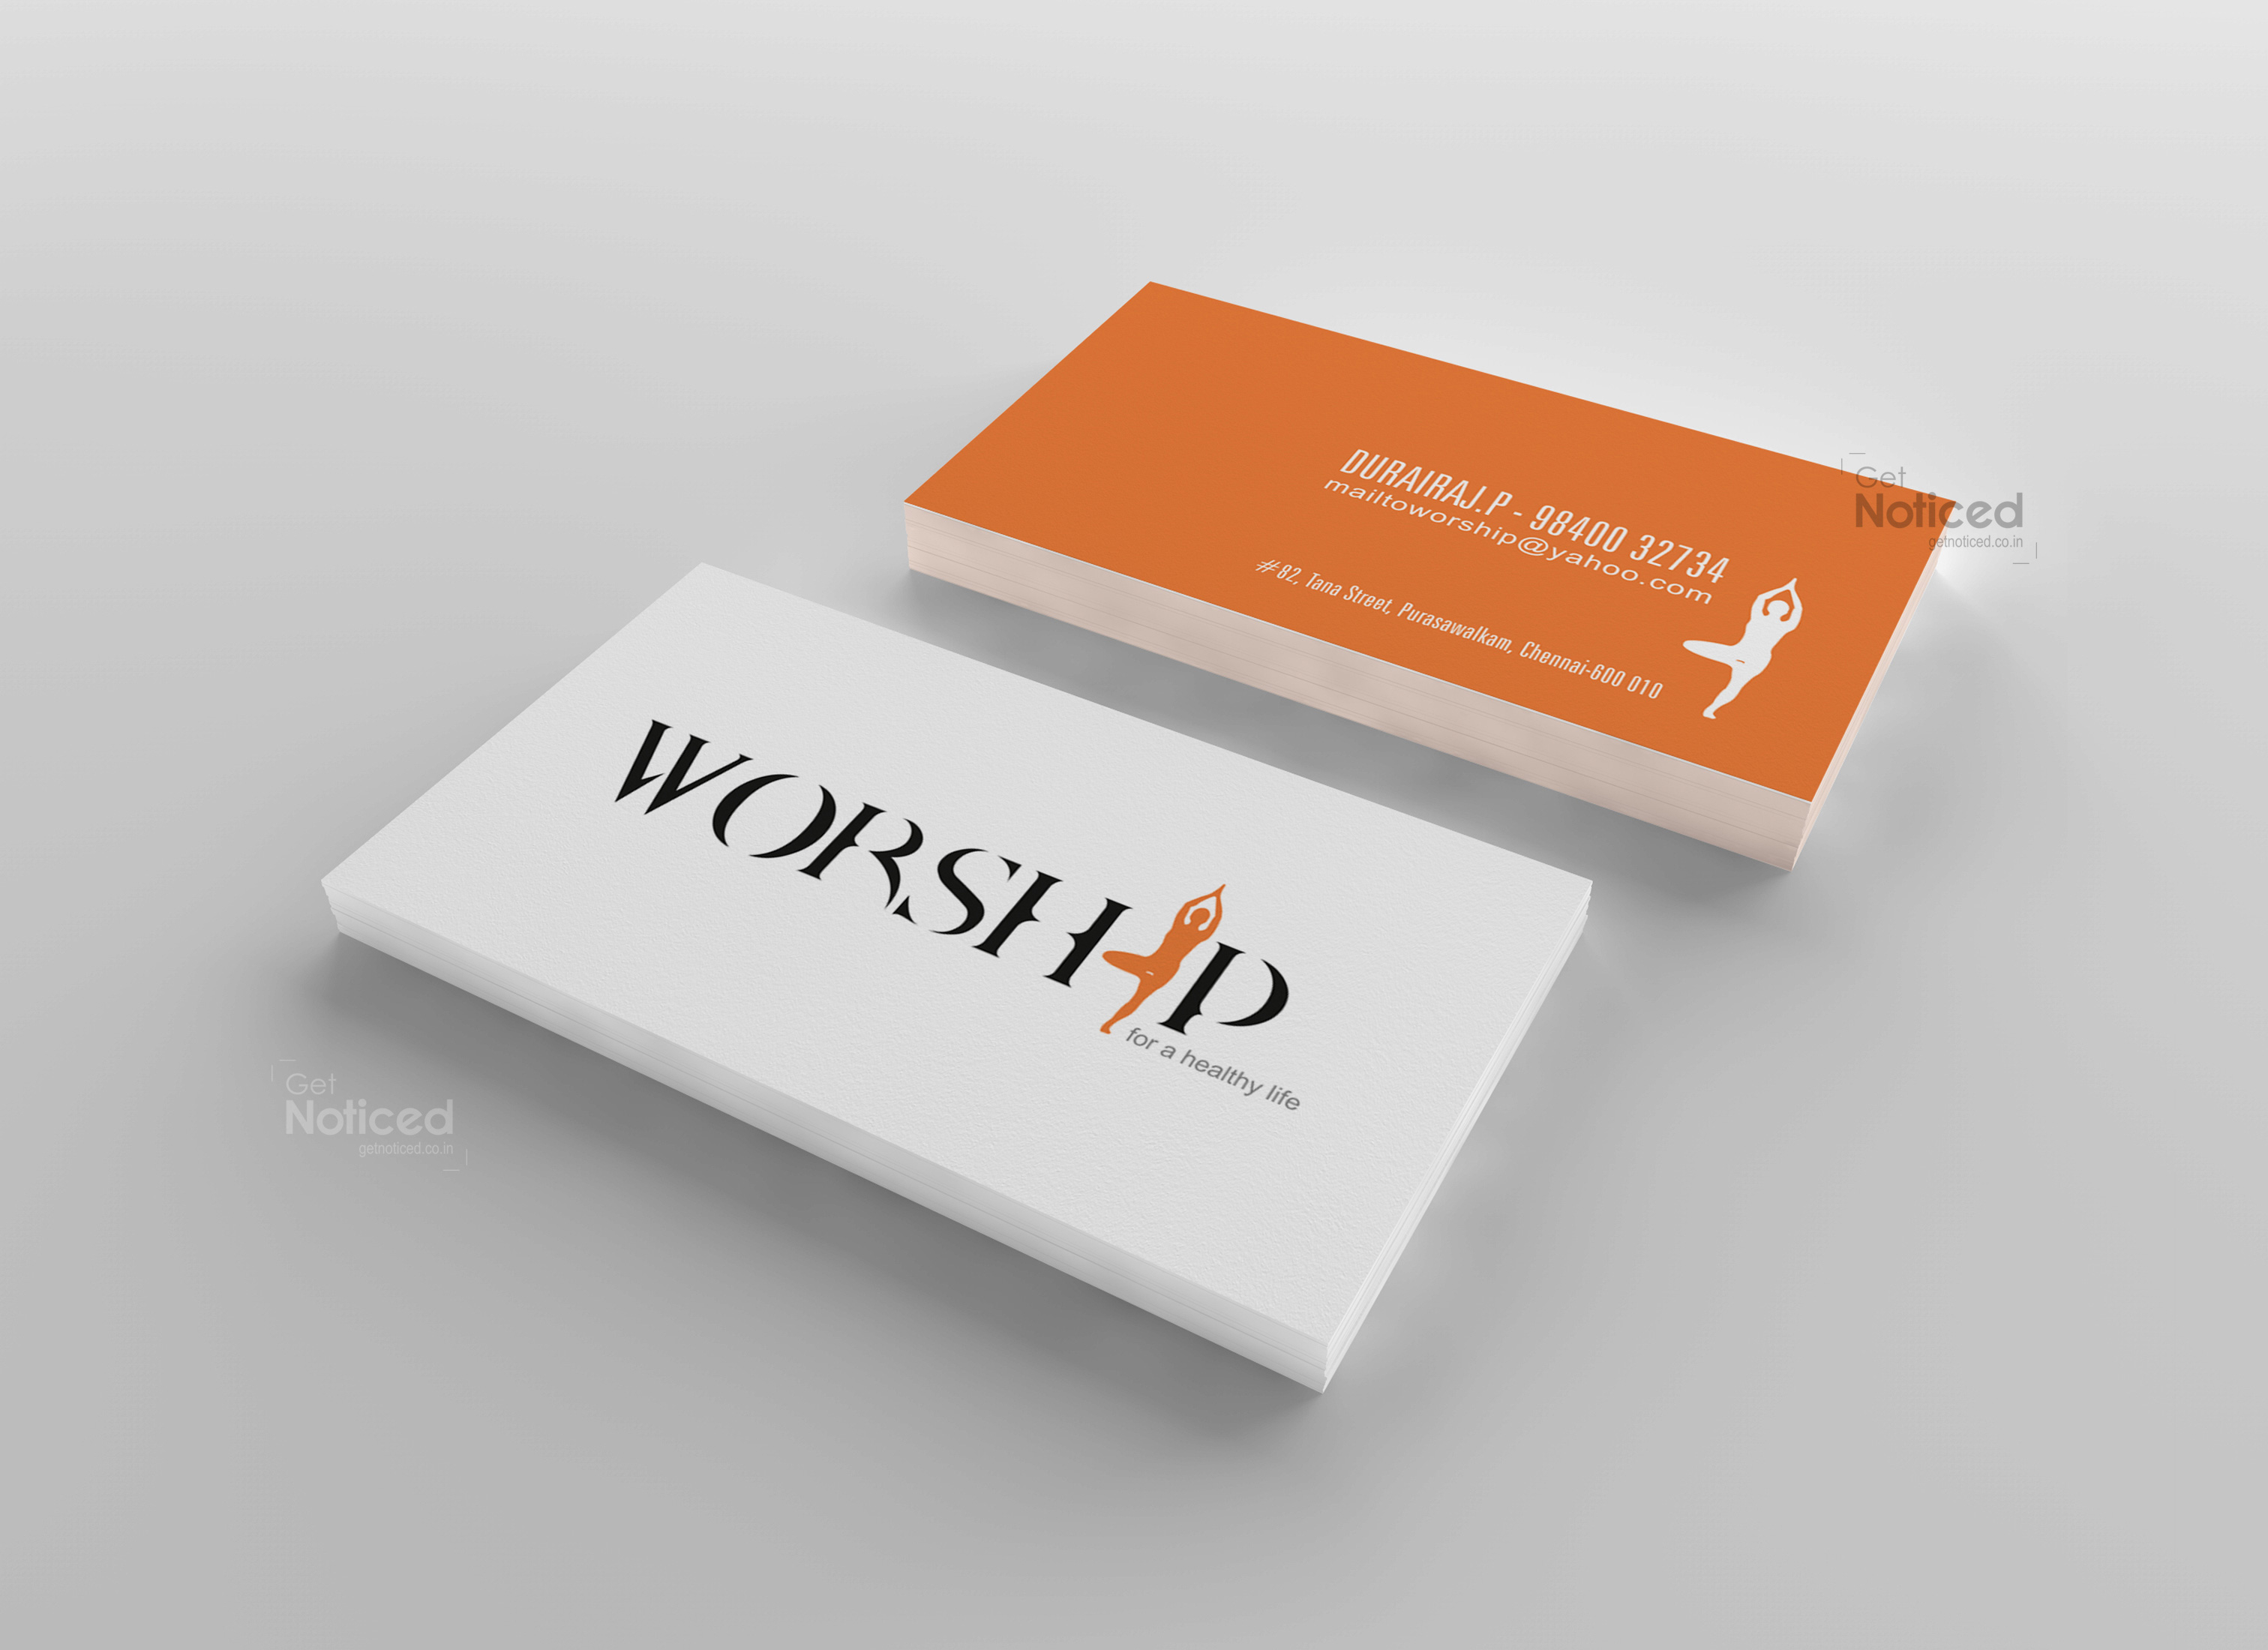 Worship Corporate Identity Design